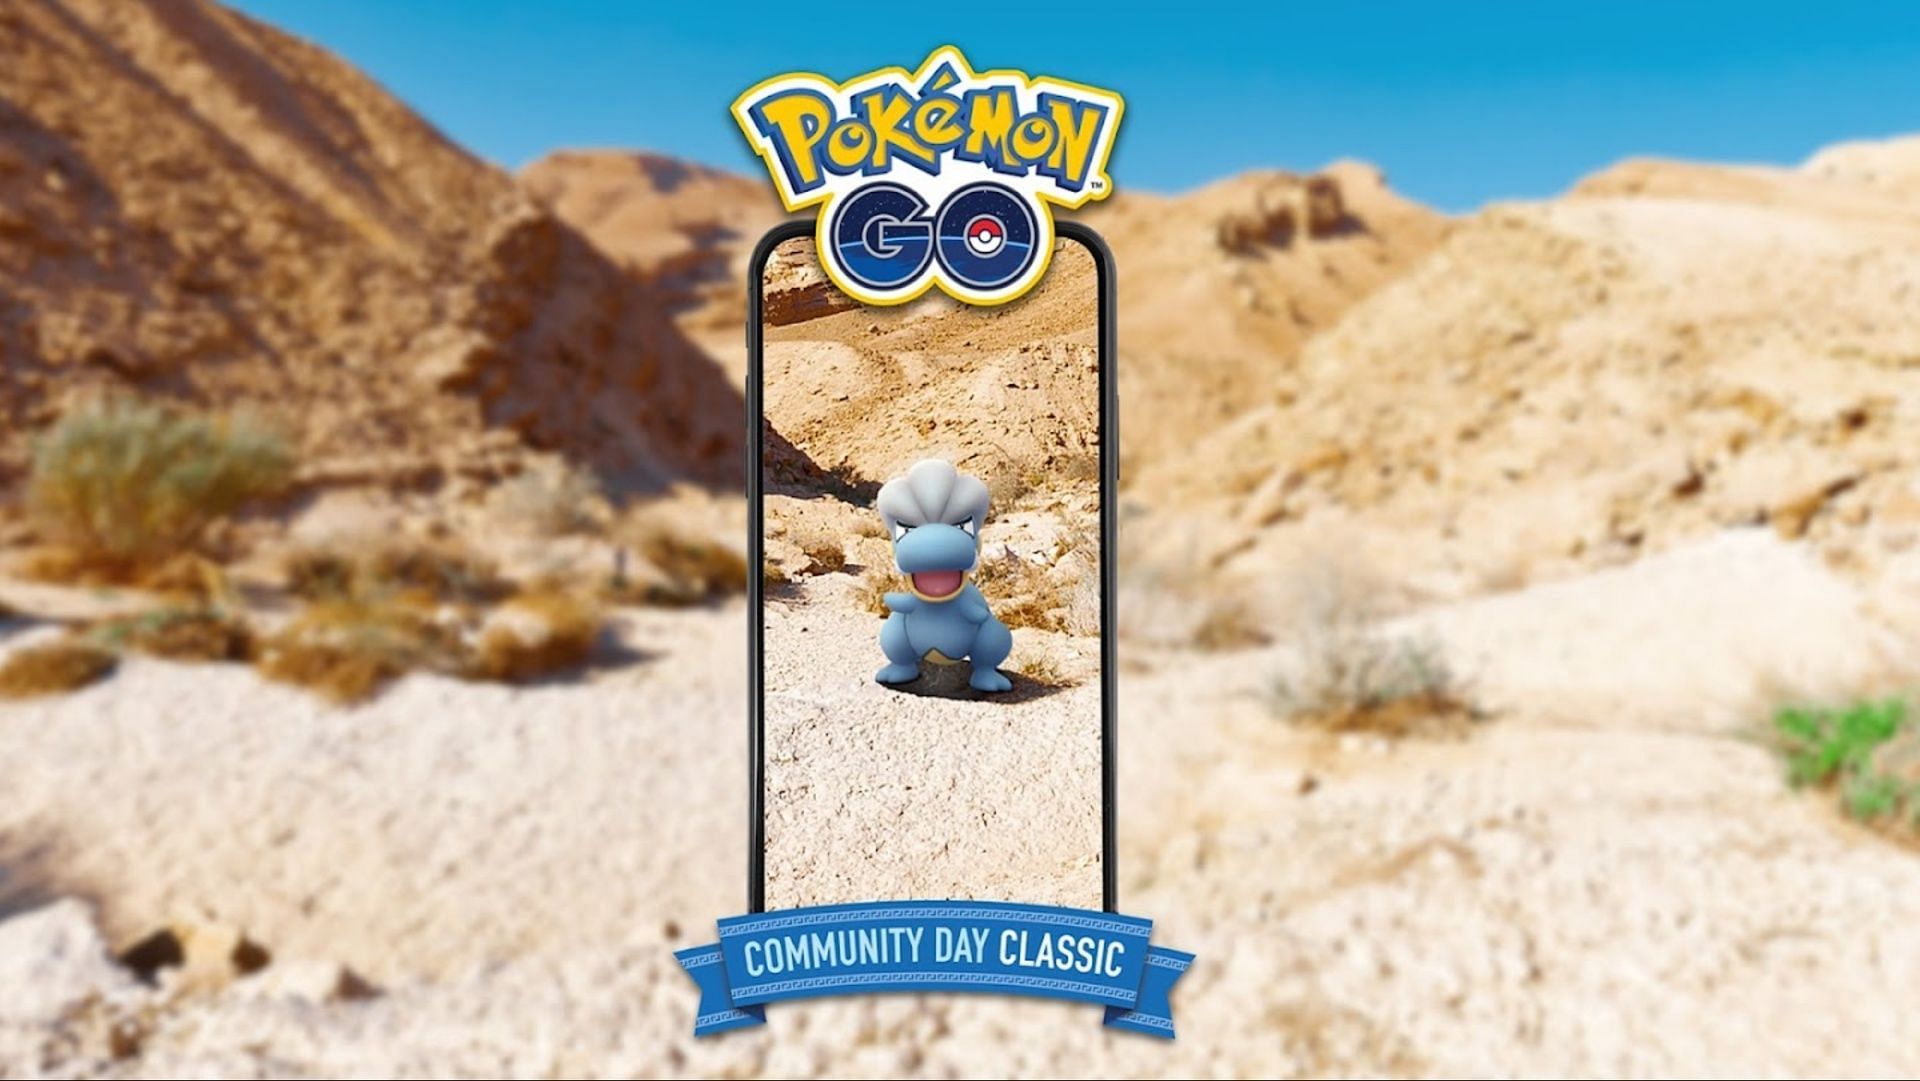 Pokemon GO Bagon Community Day Classic (Image via Niantic)